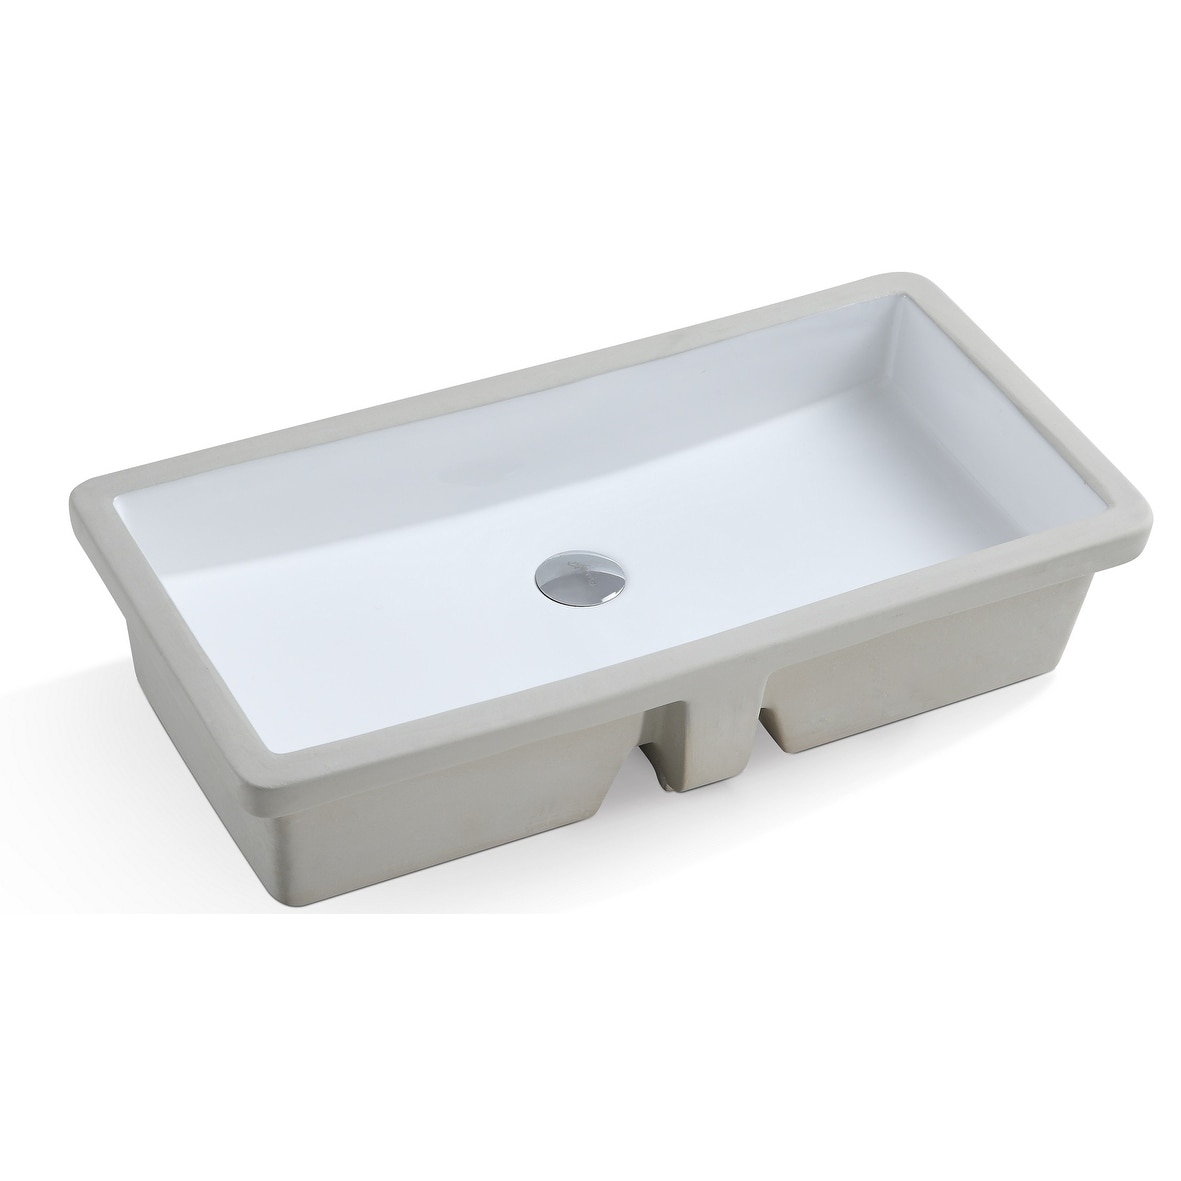 Ultra Large Ariel 278 Inch Rectangular Undermount Vitreous Ceramic Lavatory Vanity Bathroom Sink Pure White As Is Item Overstock 28875888